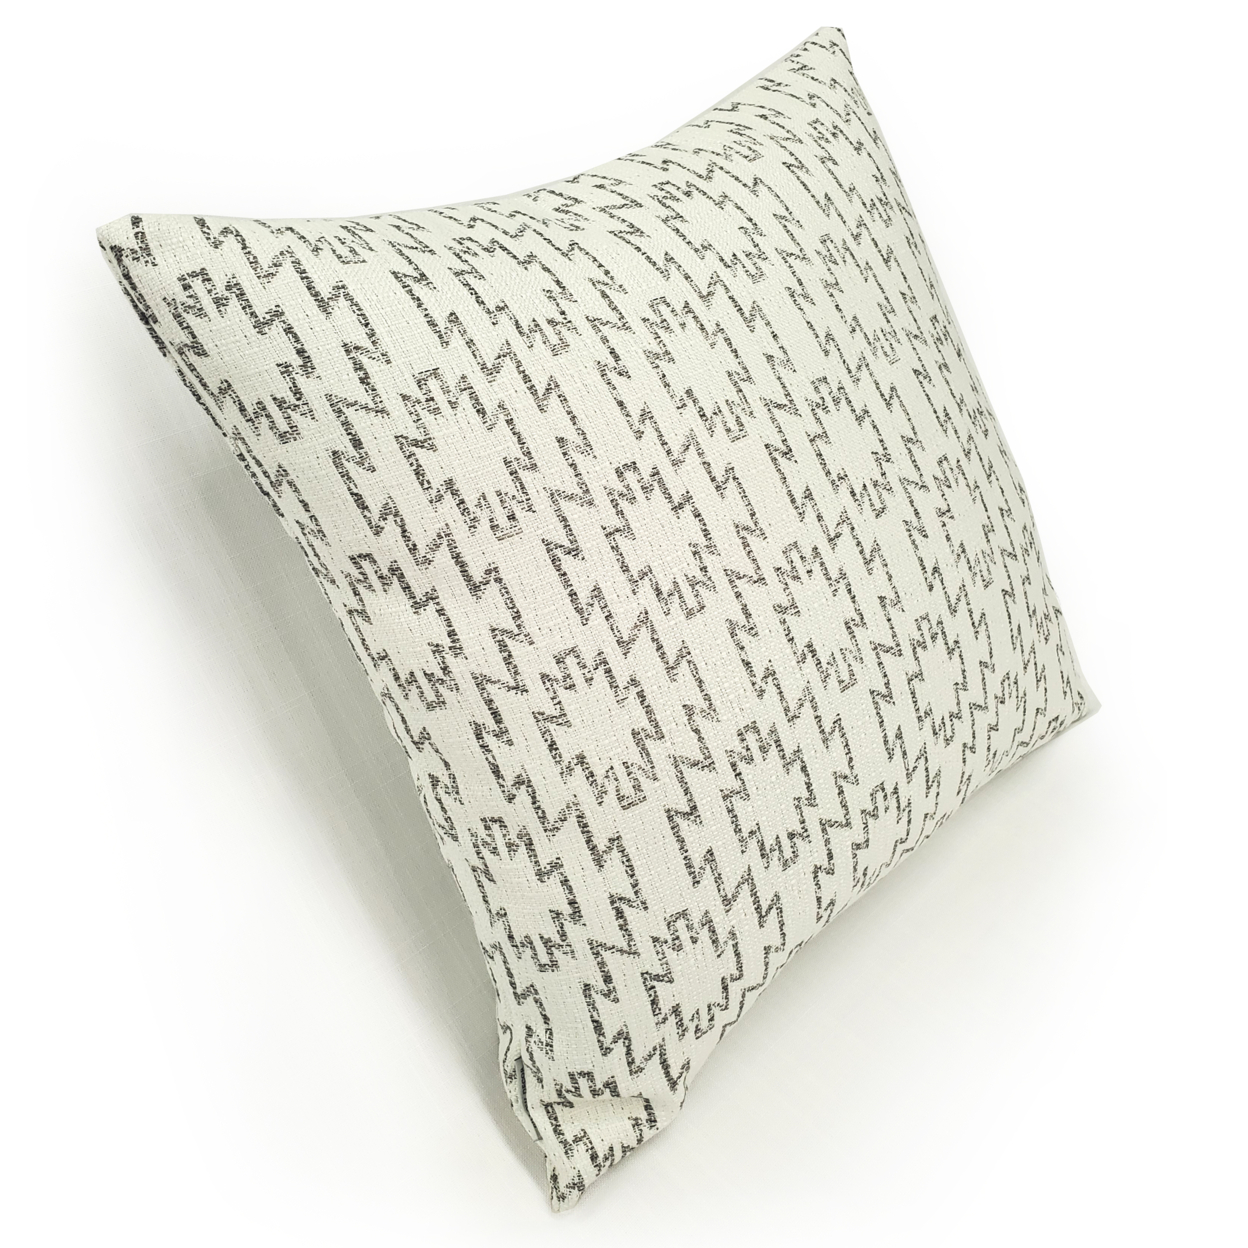 Mirador Dust Bowl Geometric Outdoor Pillow 19x19, With Polyfill Insert